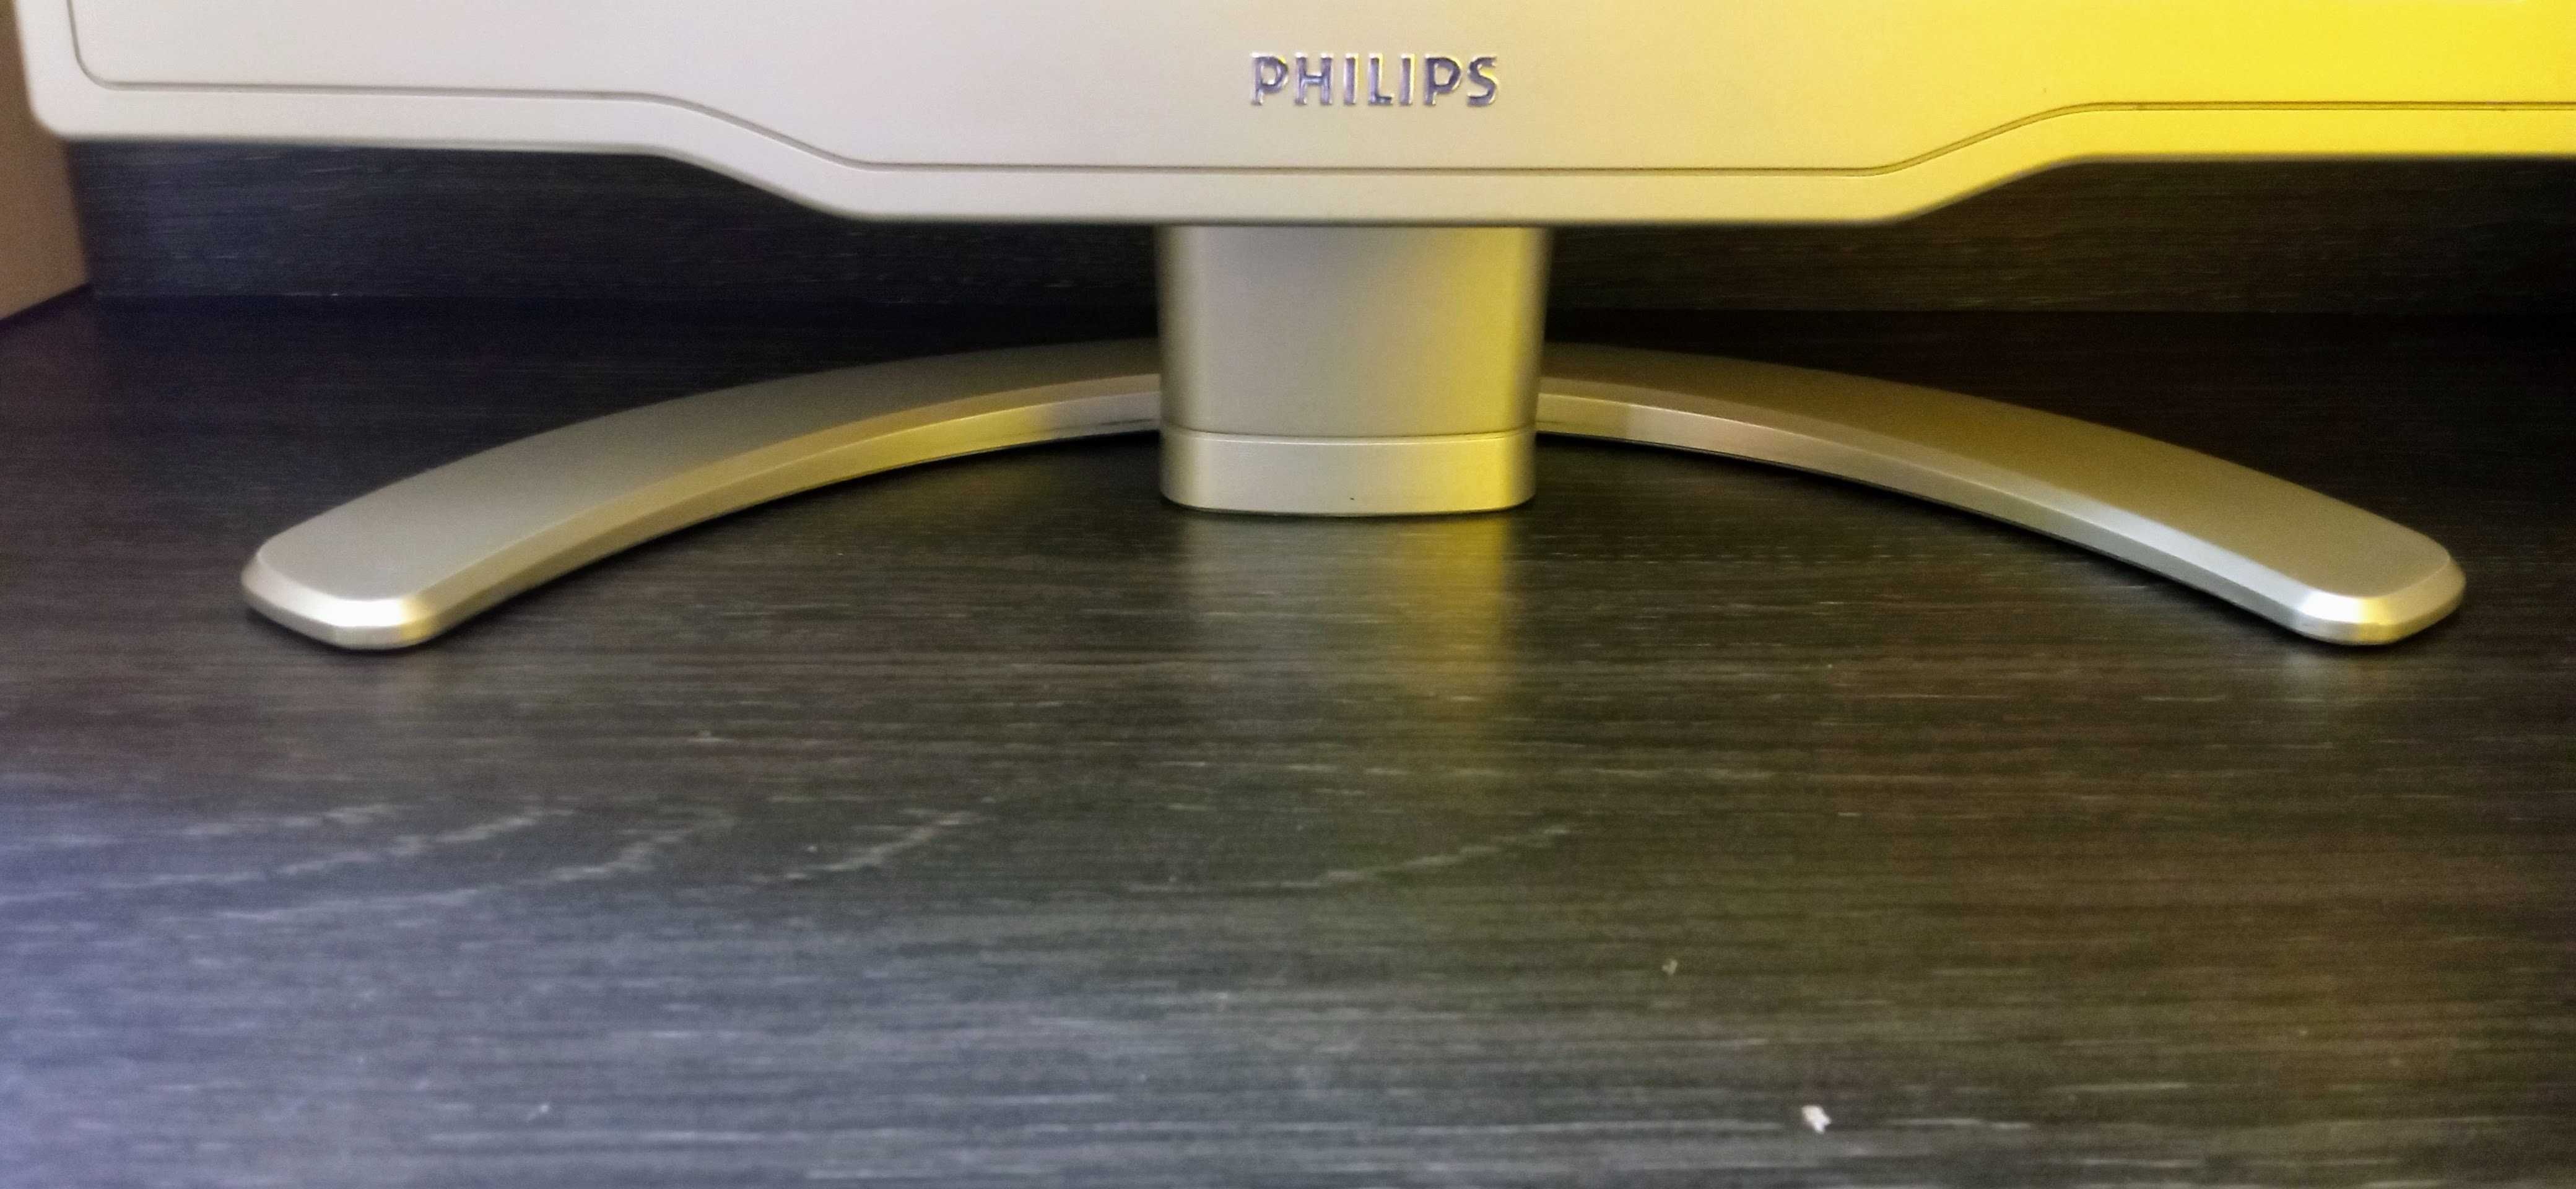 Monitor Komputerowy 17`` Philips 170C5 VGA Super stan - 100% Sprawny